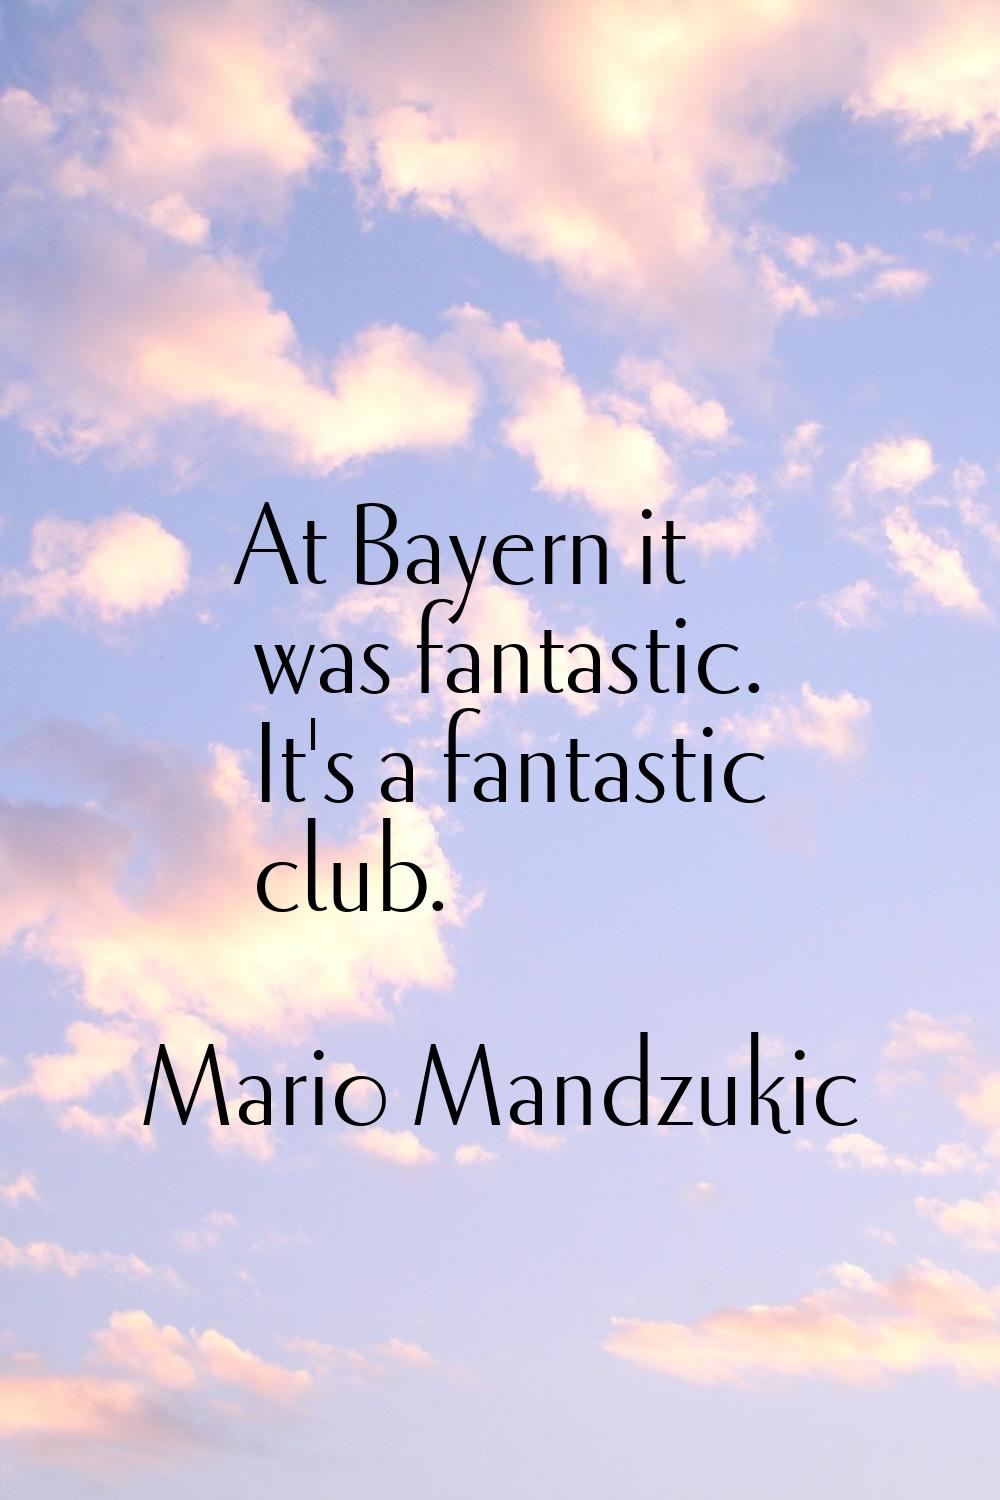 At Bayern it was fantastic. It's a fantastic club.